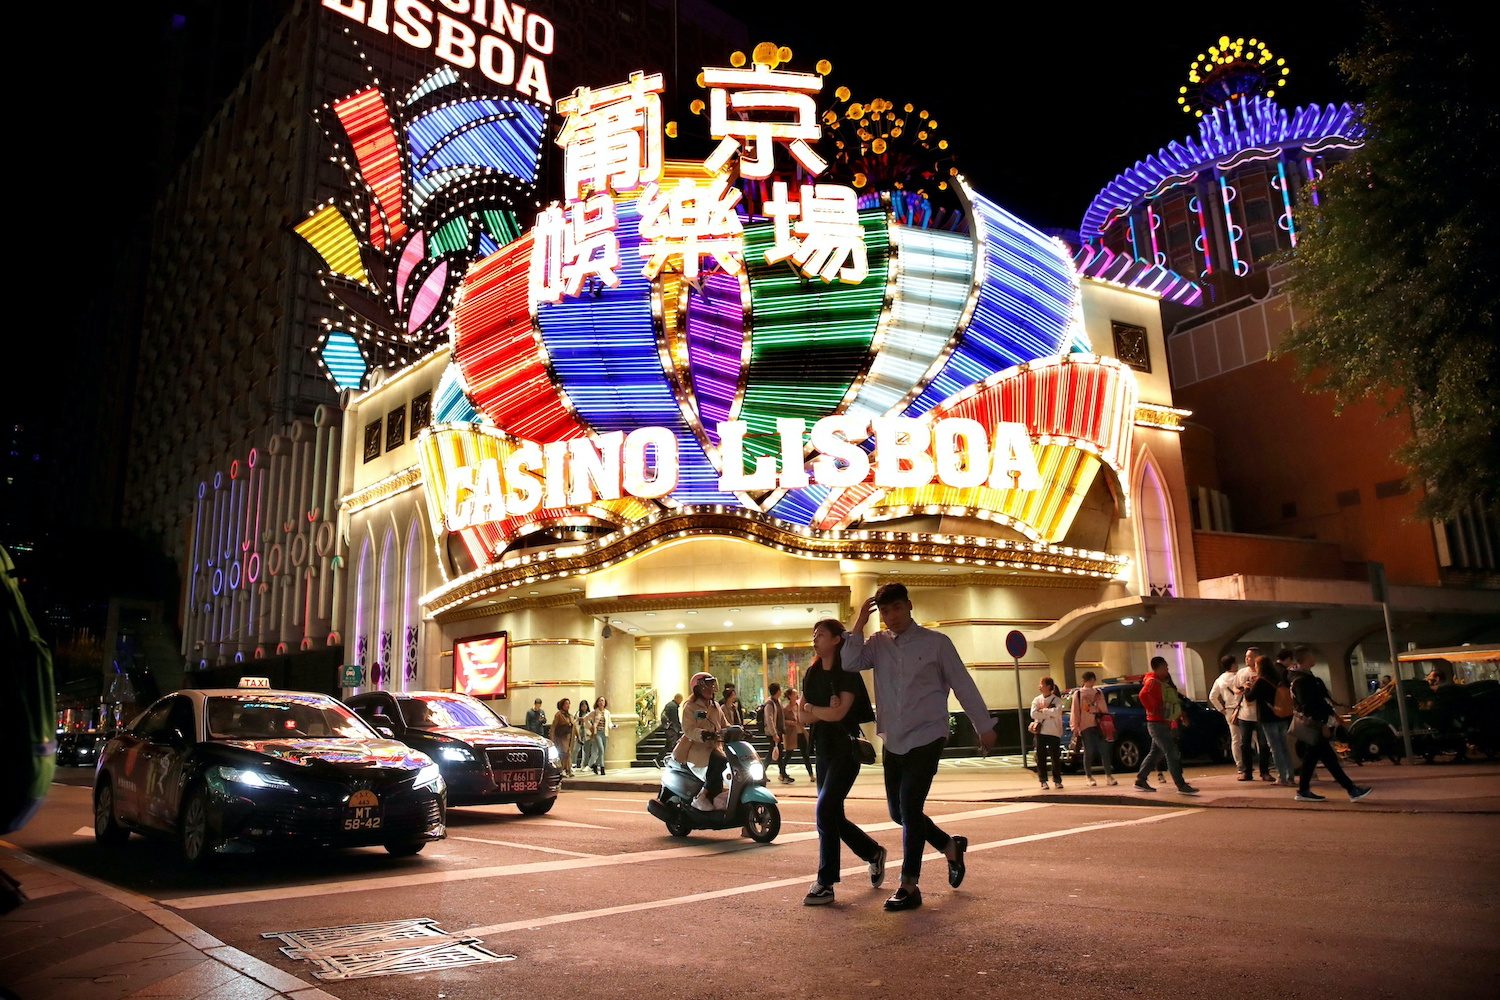 Macau’s casino losses engulf gambling hub as no quick fix in sight